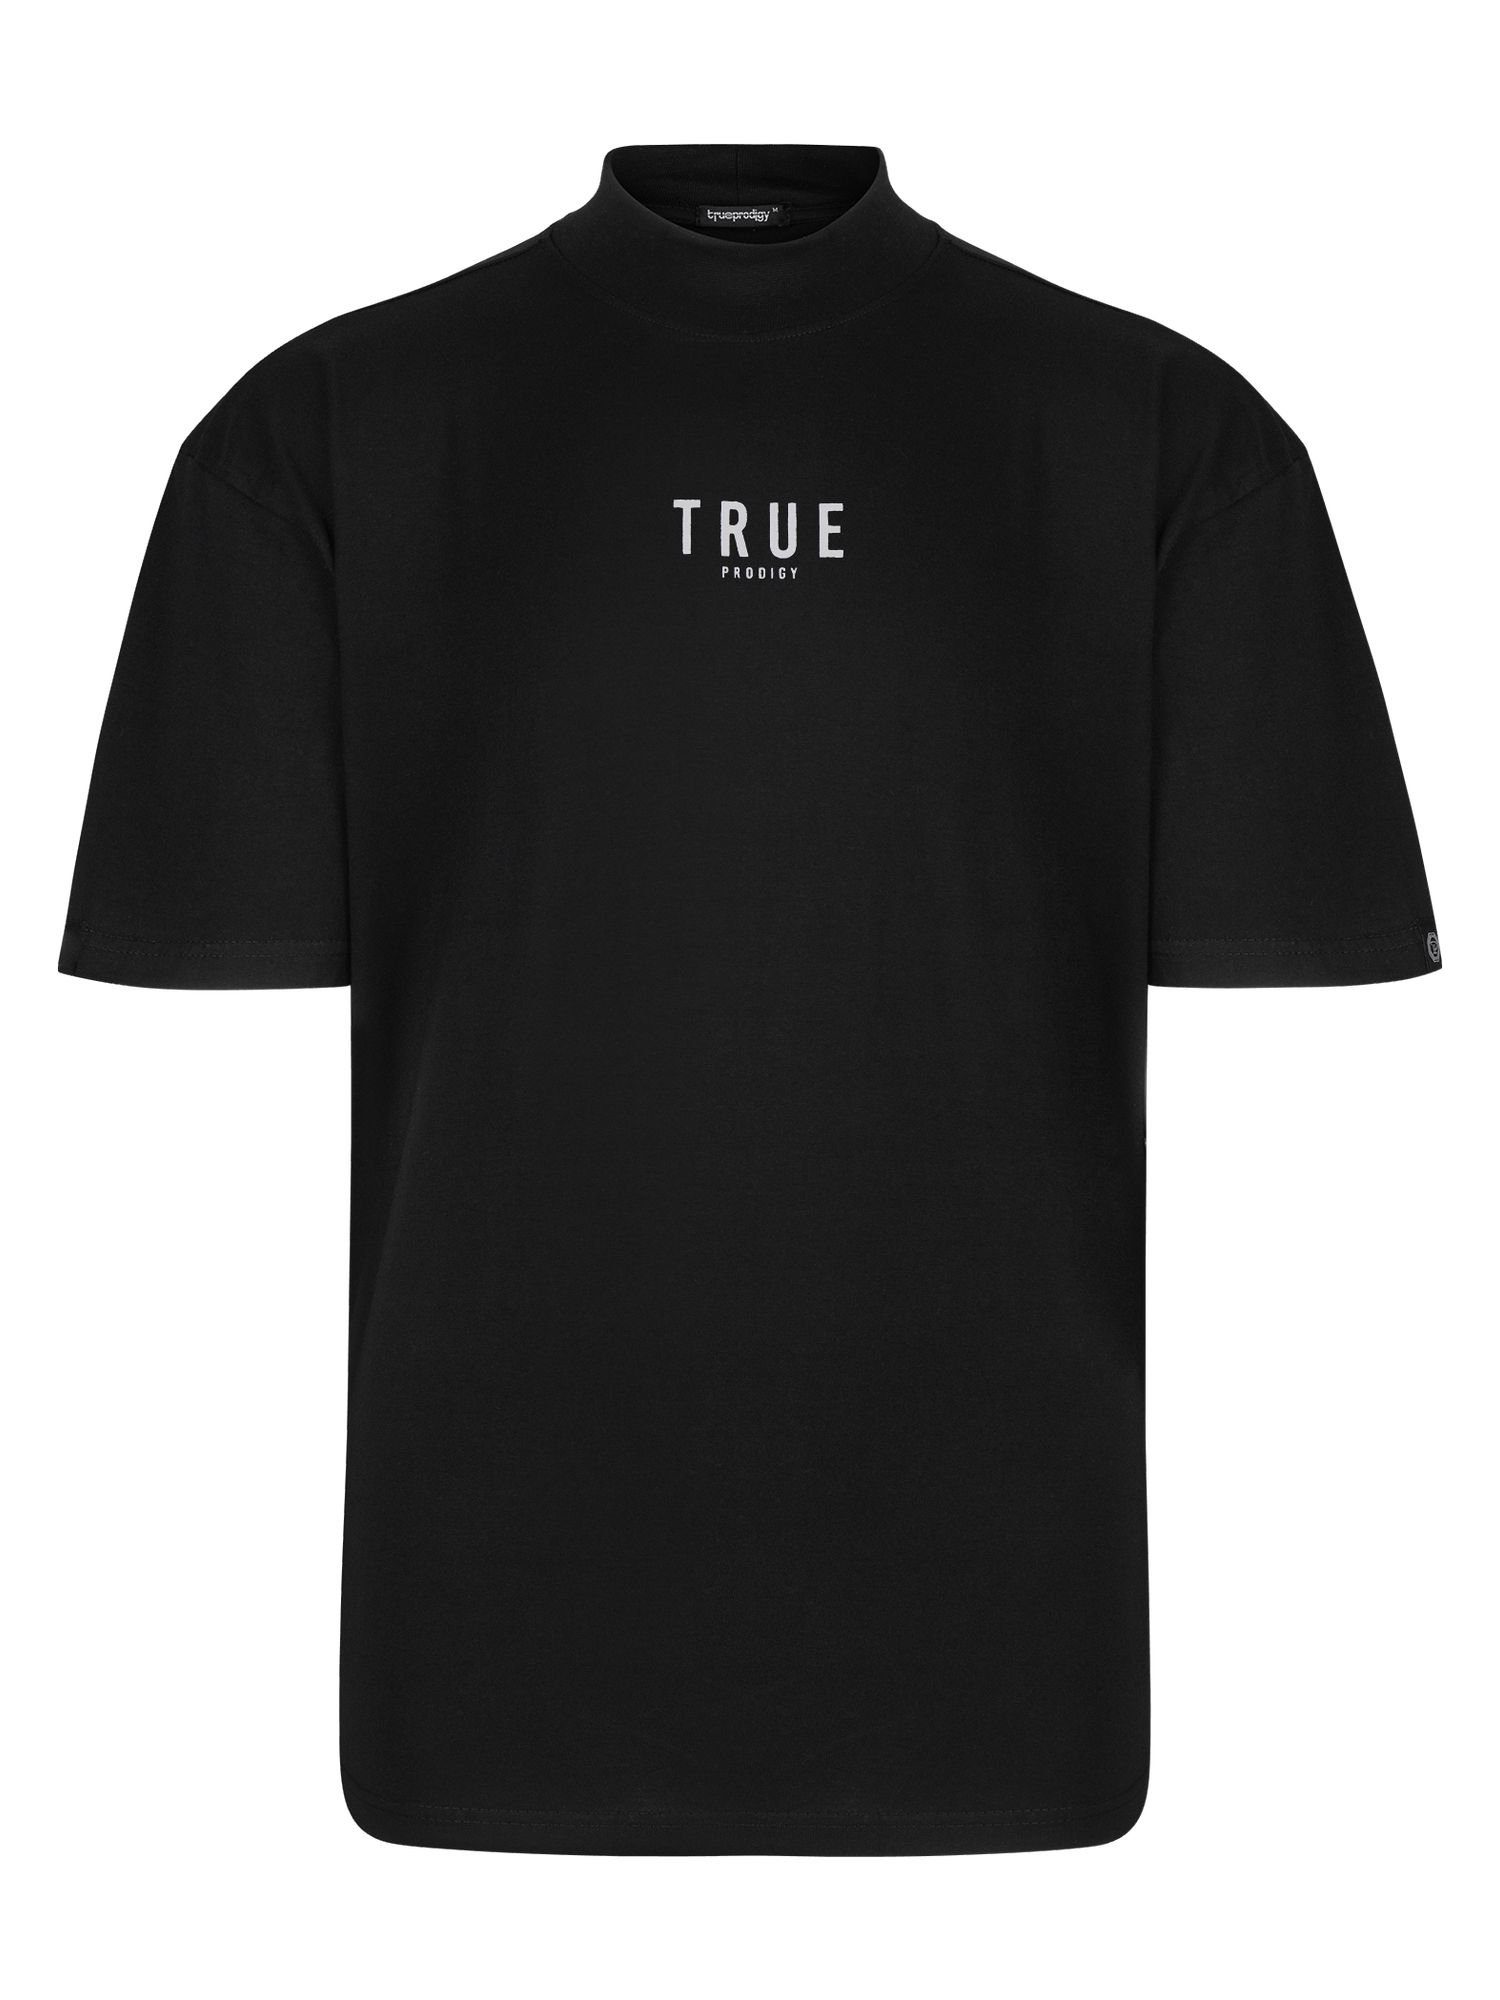 Stoff Black Riley Stehkragen Logoprint trueprodigy dicker Oversize-Shirt